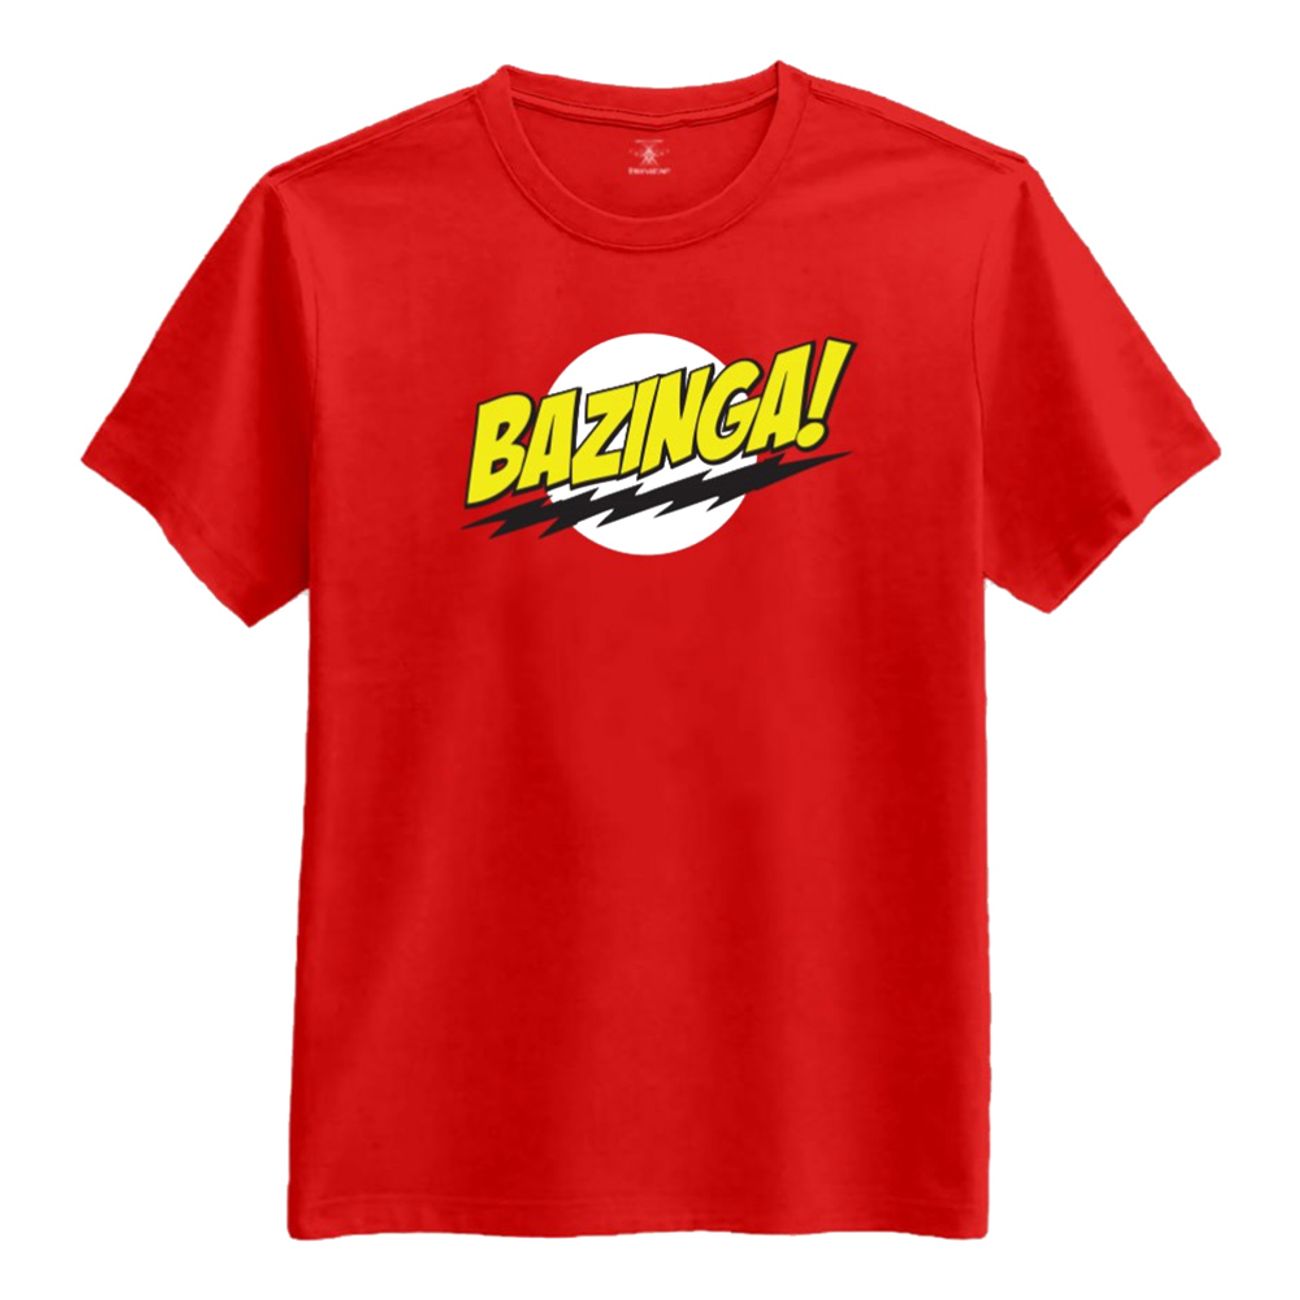 bazinga-t-shirt-2